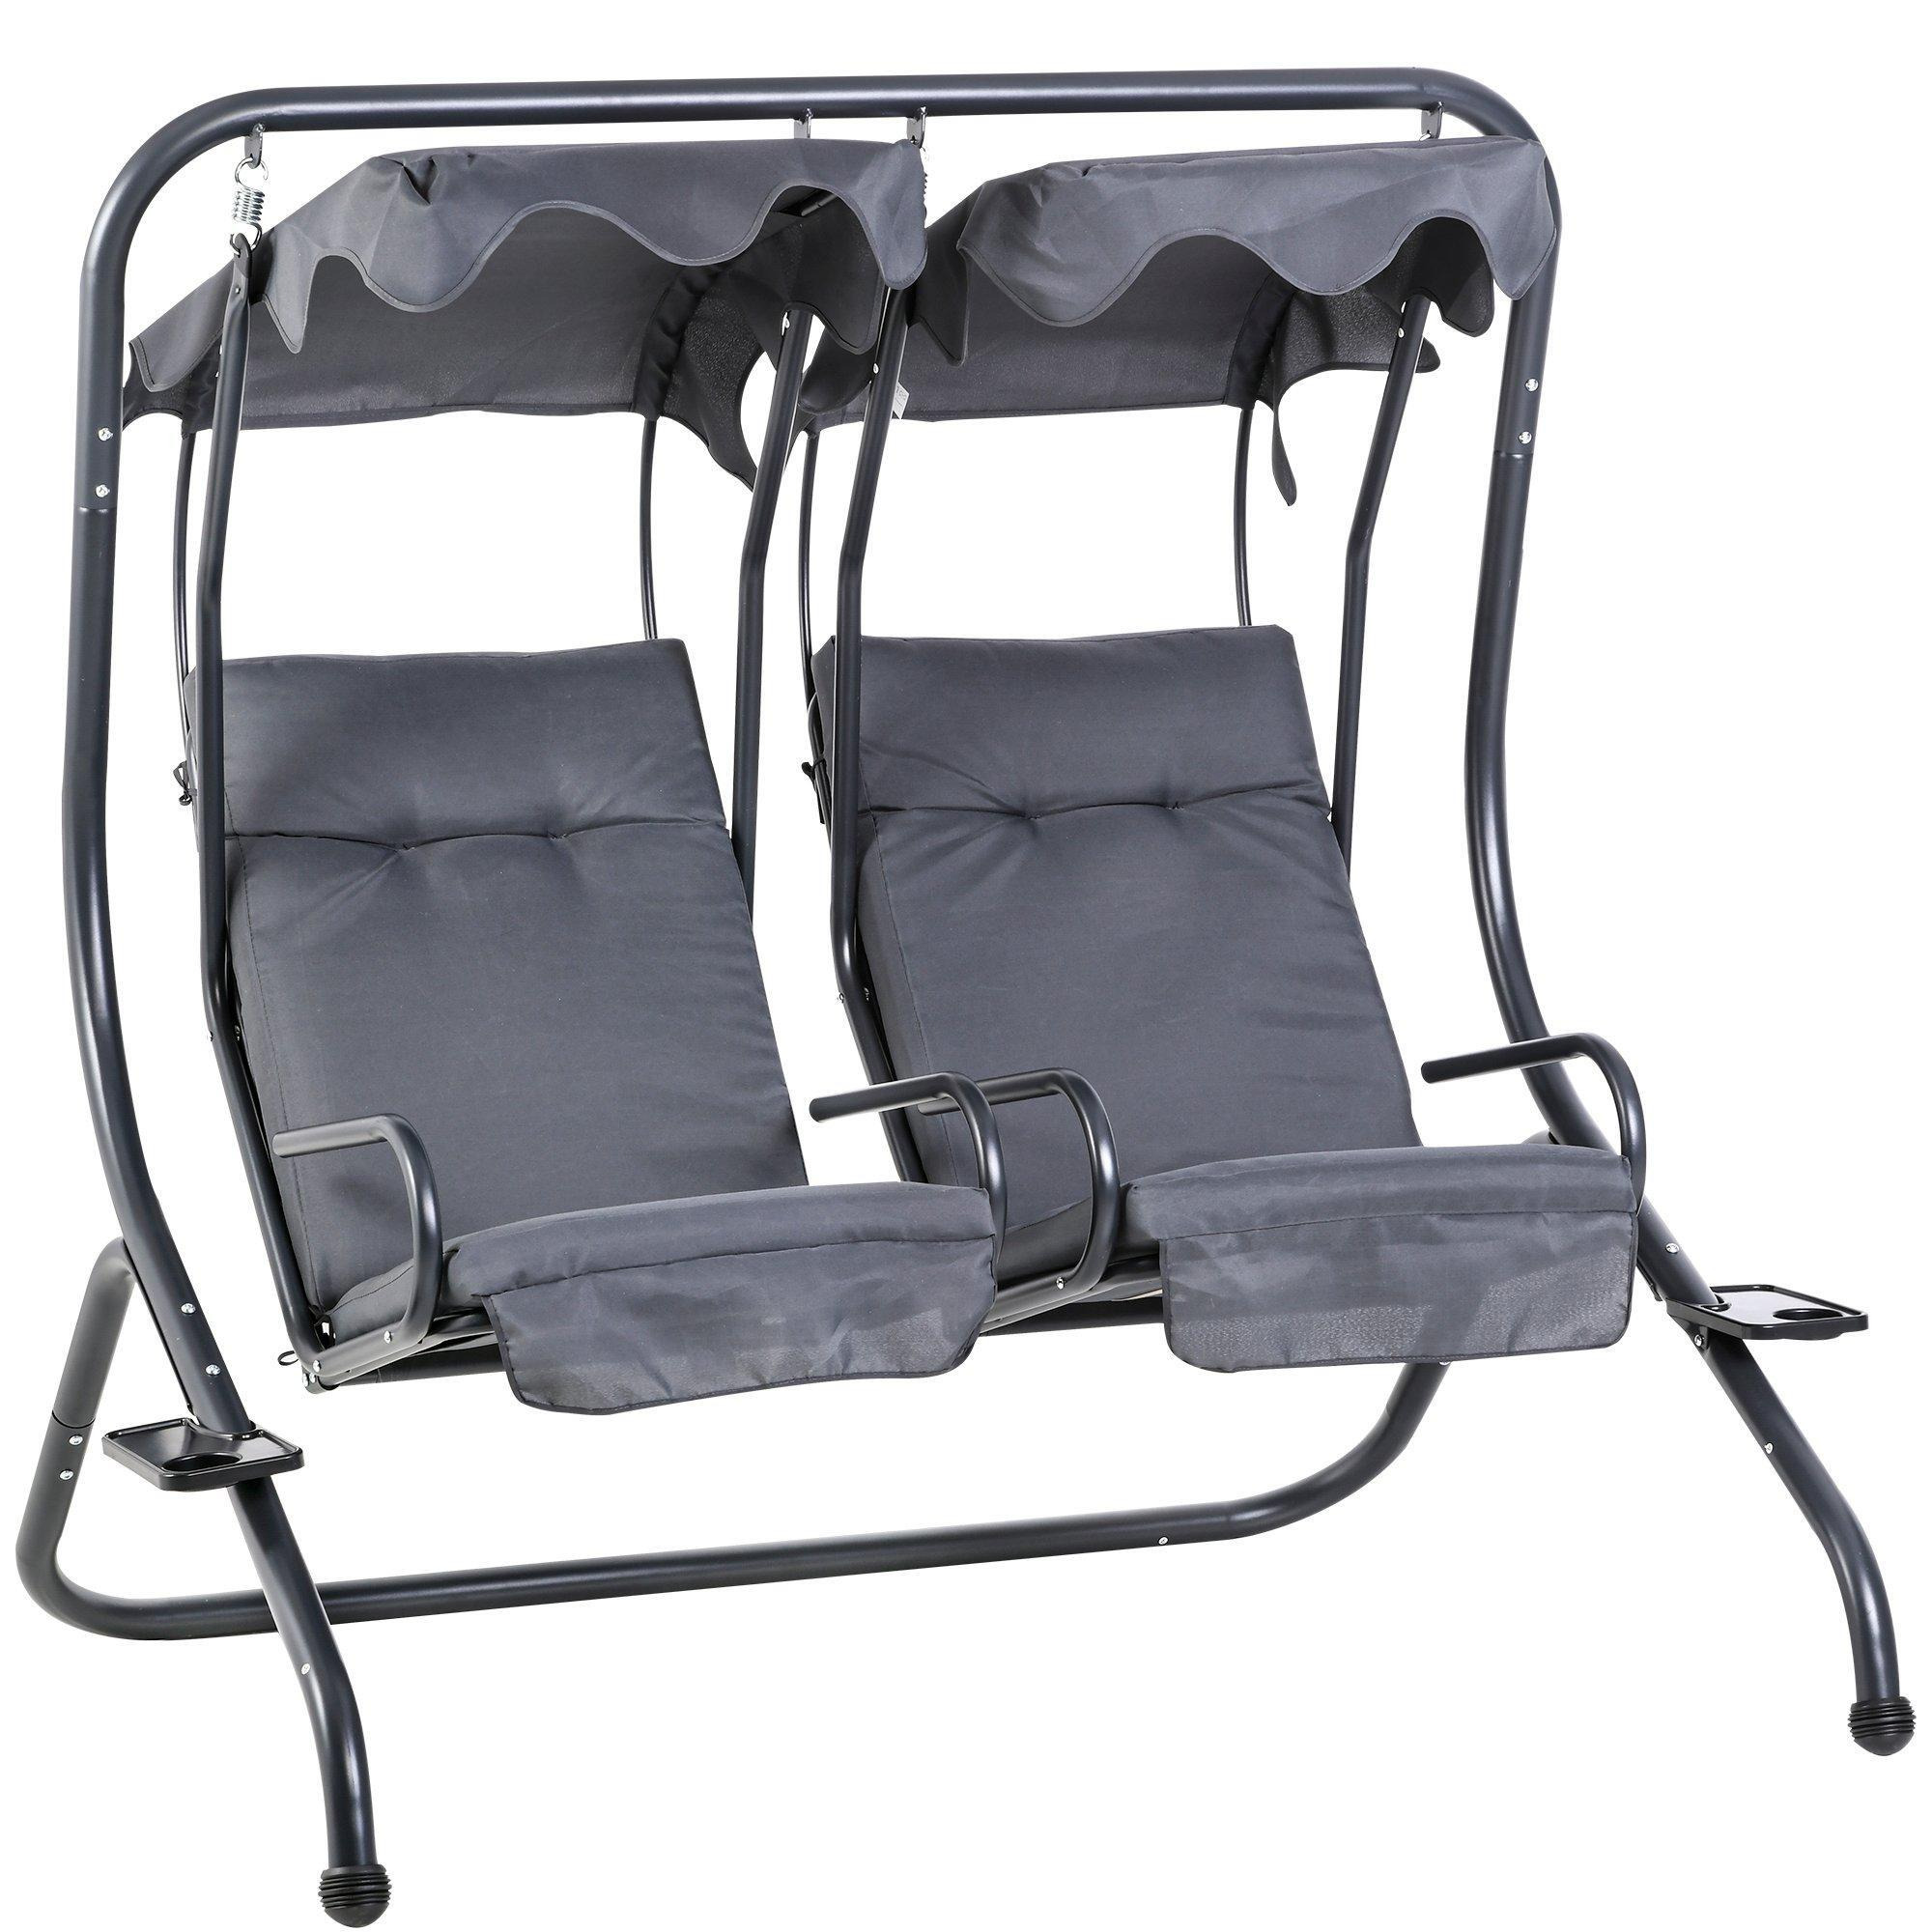 2 Seater Garden Metal Swing Seat Patio Swinging Chair Hammock Canopy - image 1